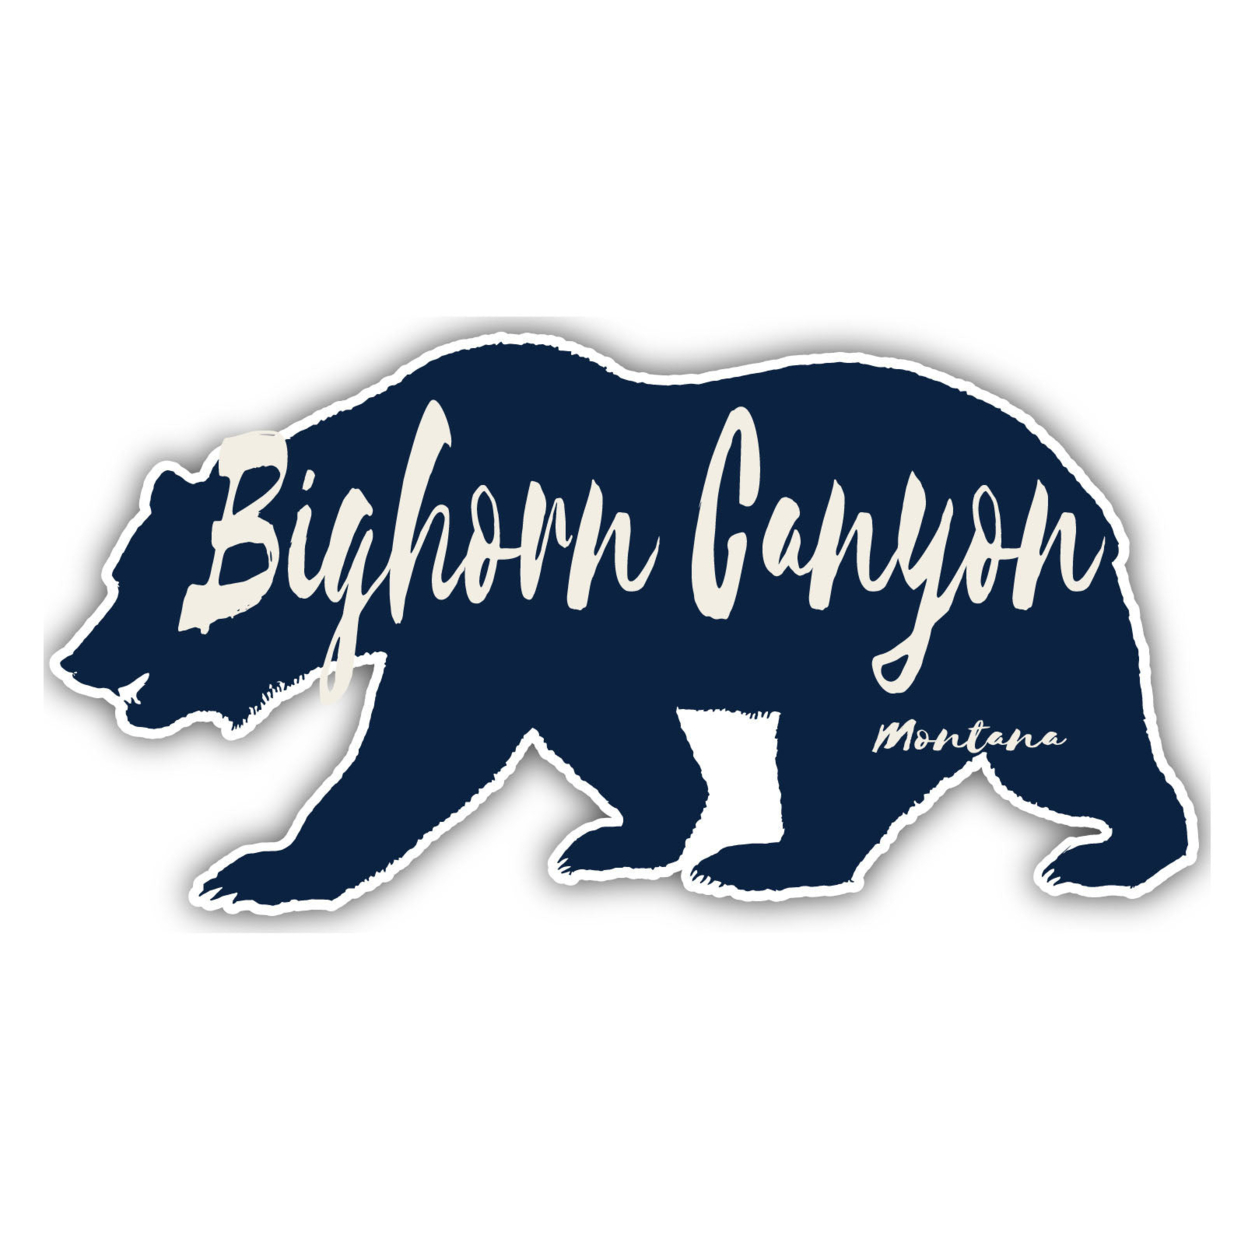 Bighorn Canyon Montana Souvenir Decorative Stickers (Choose Theme And Size) - Single Unit, 8-Inch, Bear